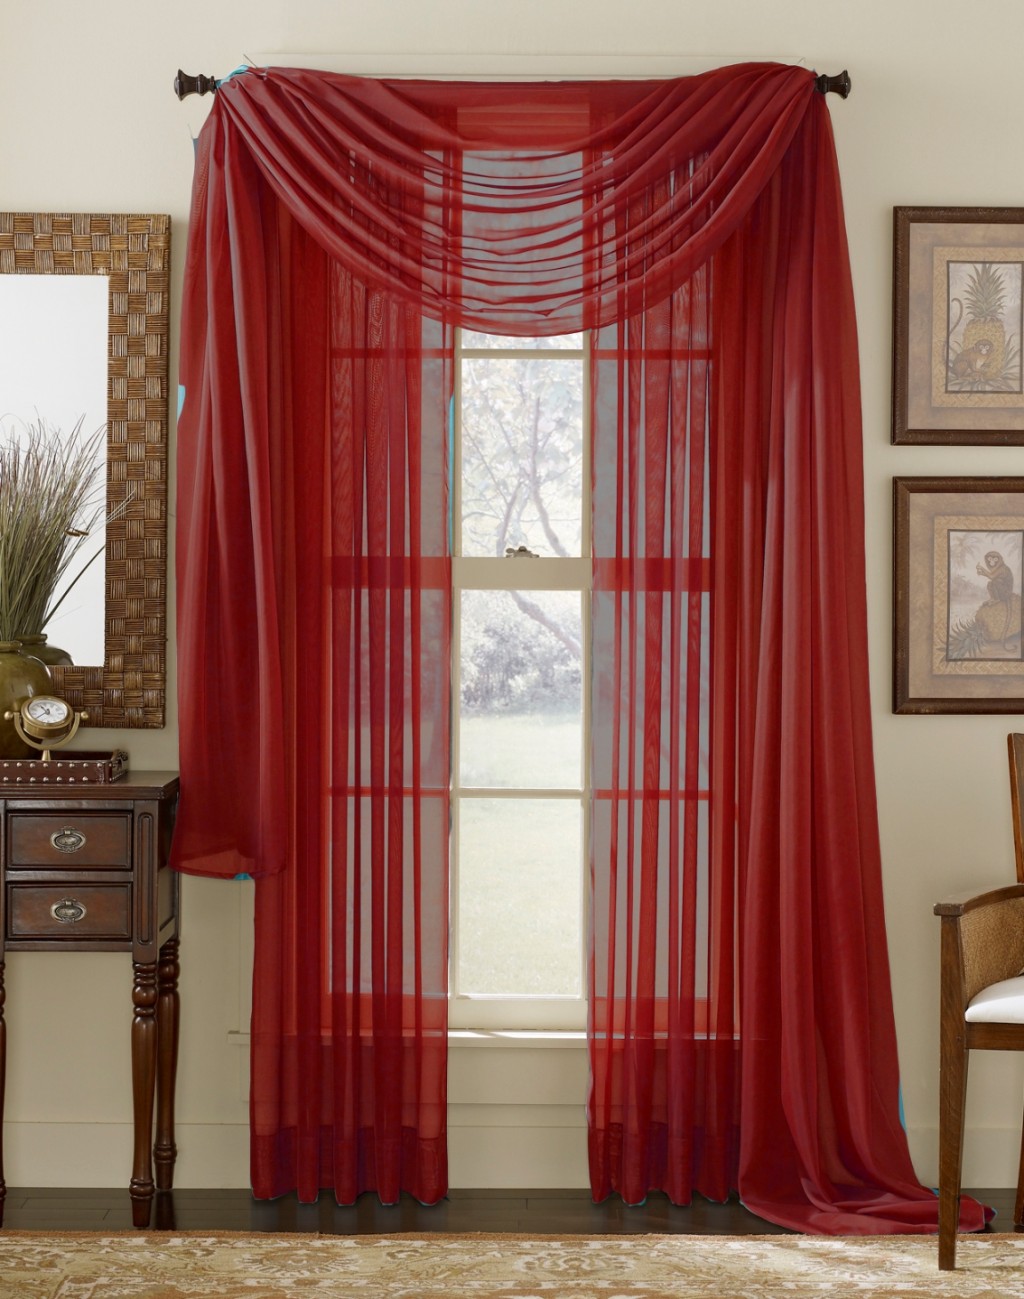 Curtain Scarf in Curtain